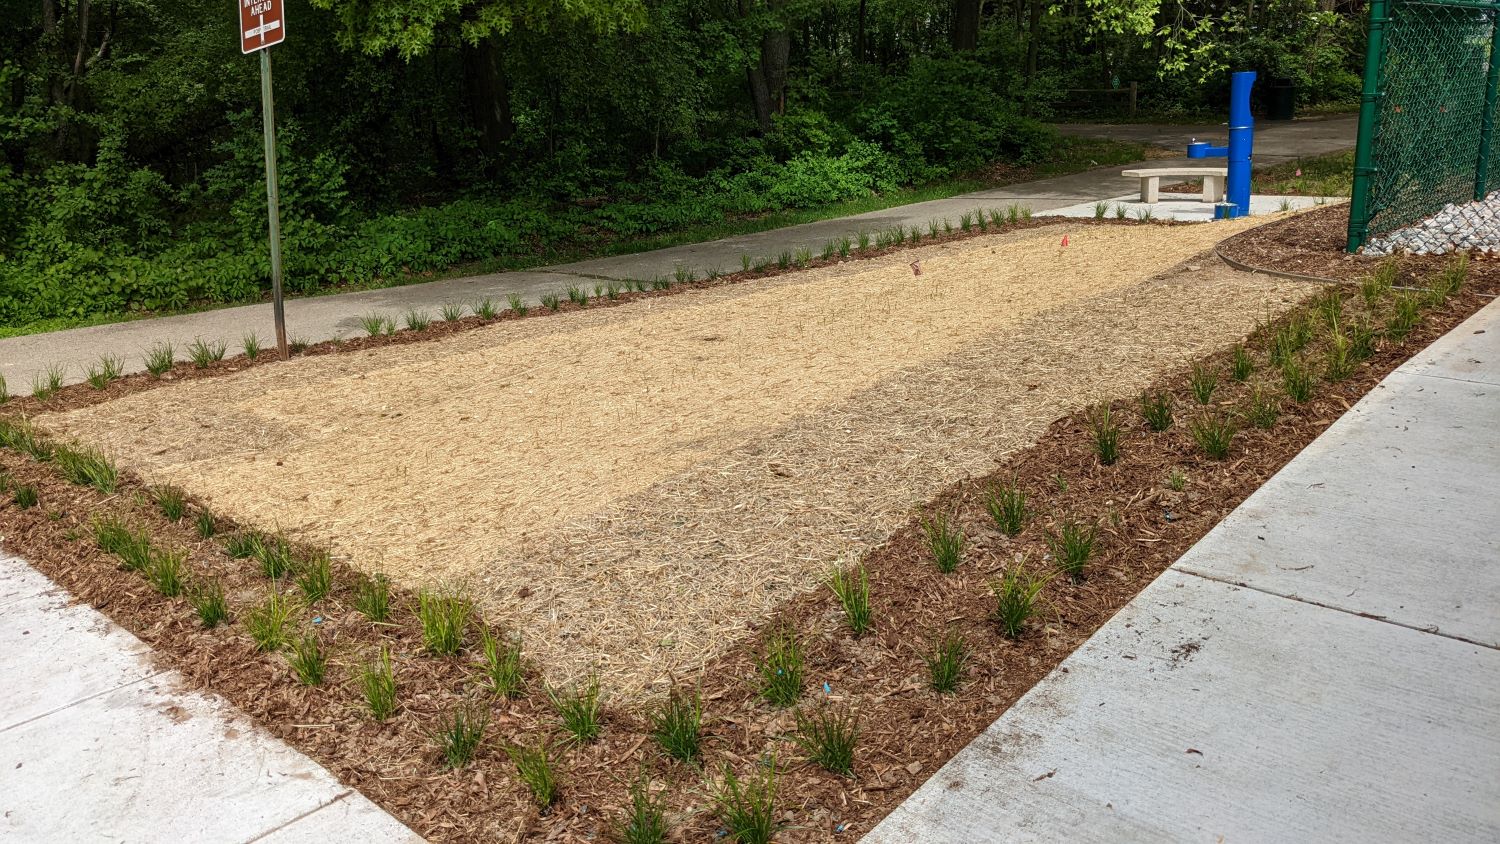 Portage Public Library Basic Shortgrass plot soon after planting